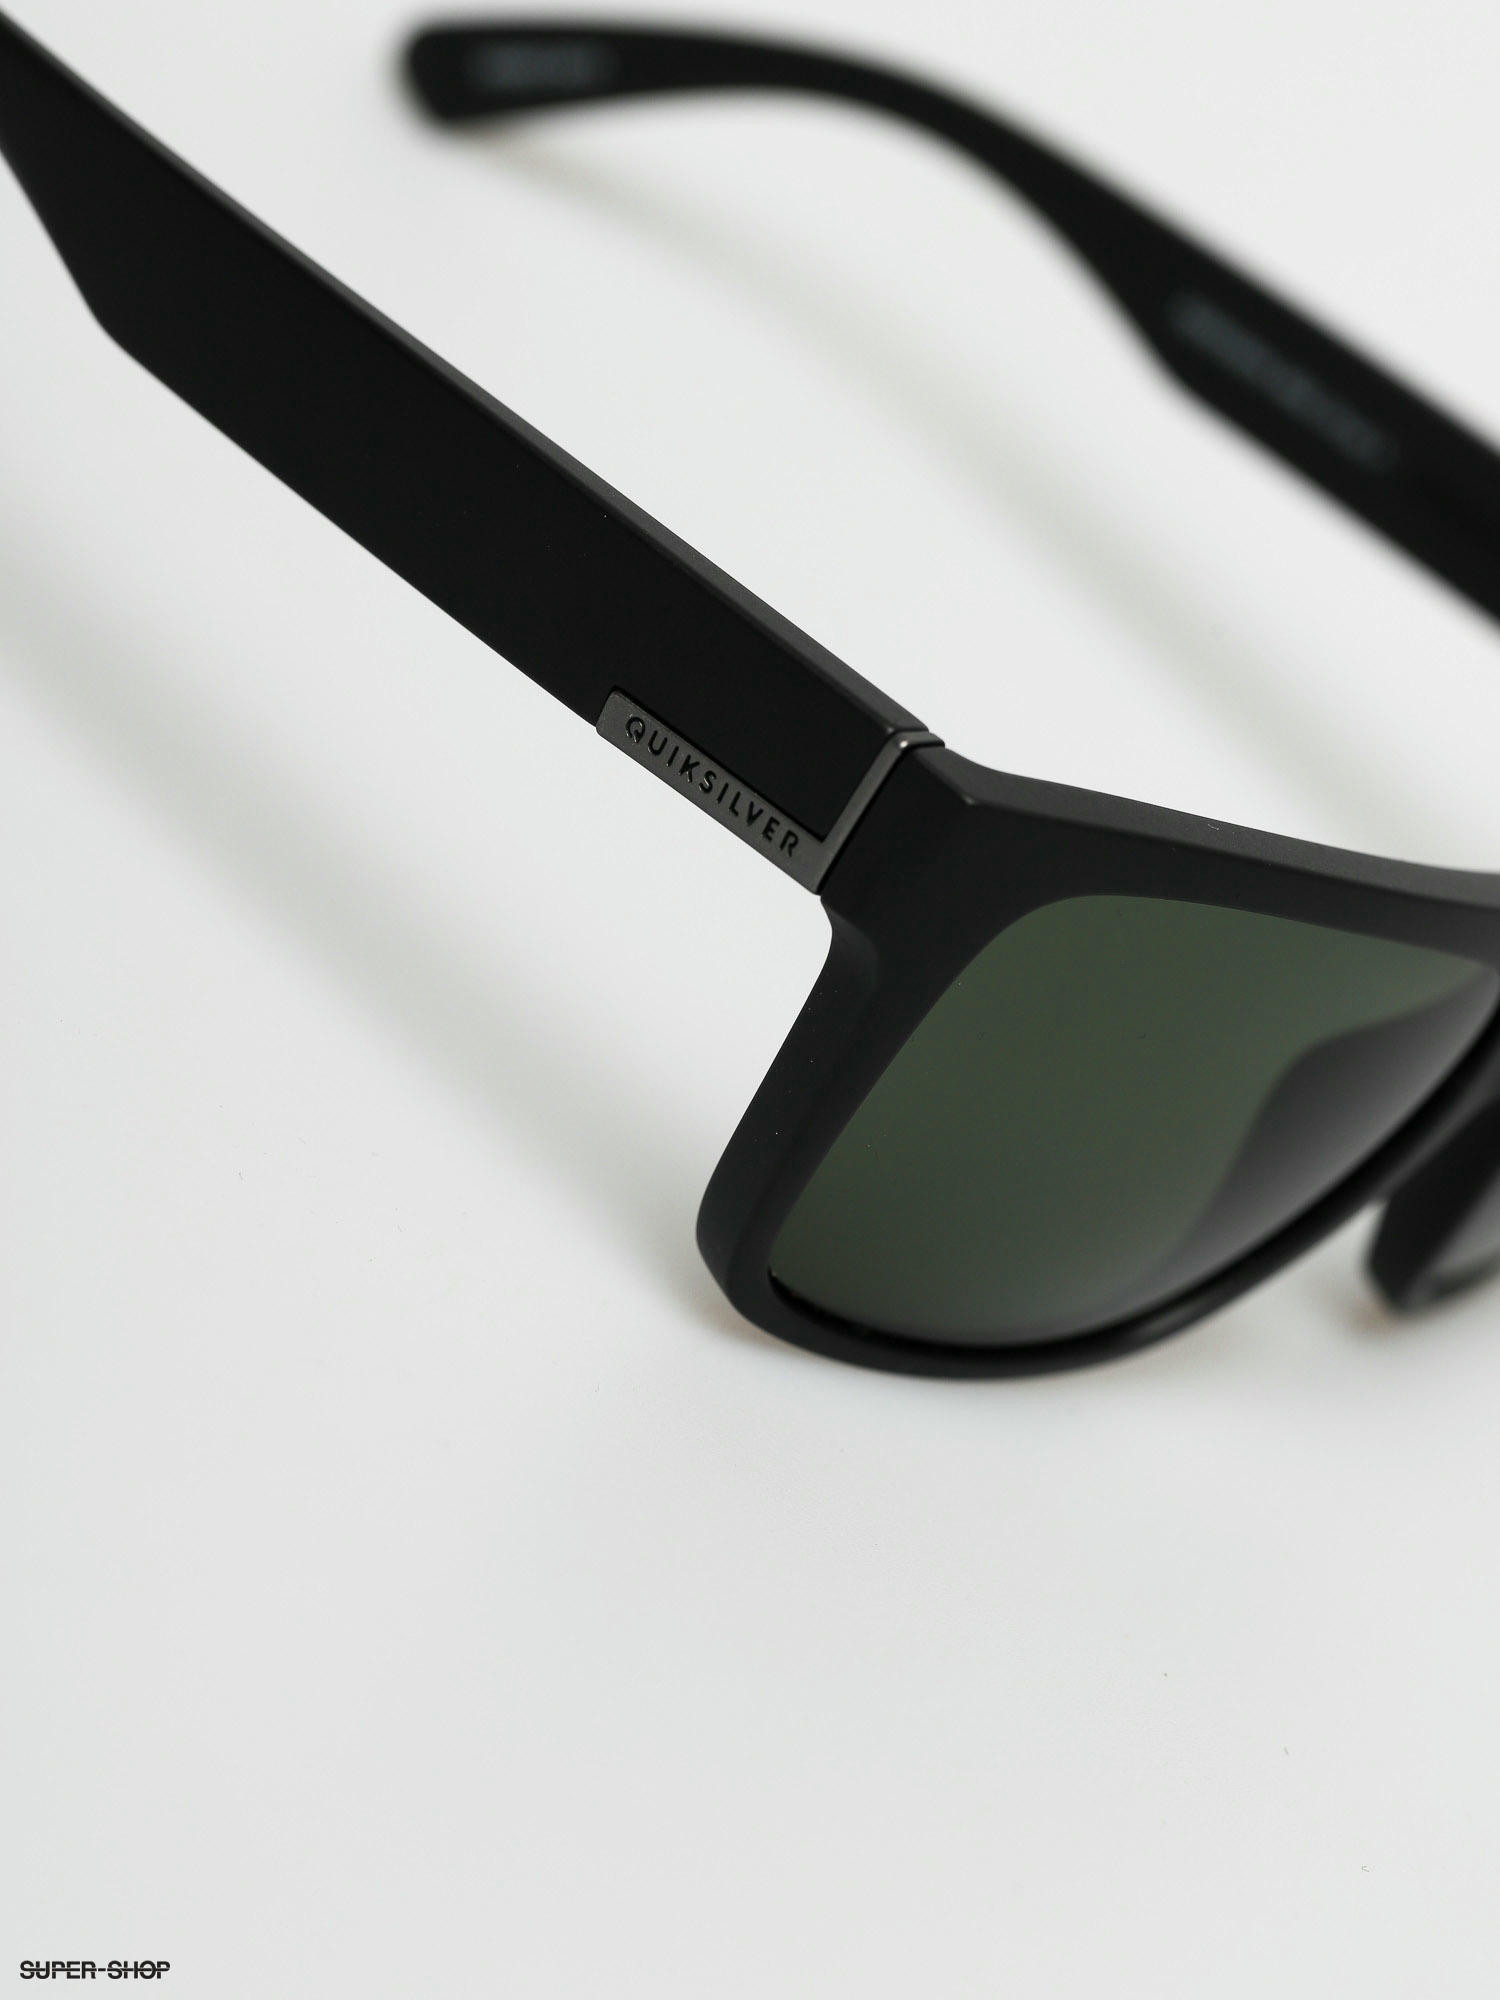 (matte p) Polarized Sunglasses black/green Quiksilver Bruiser